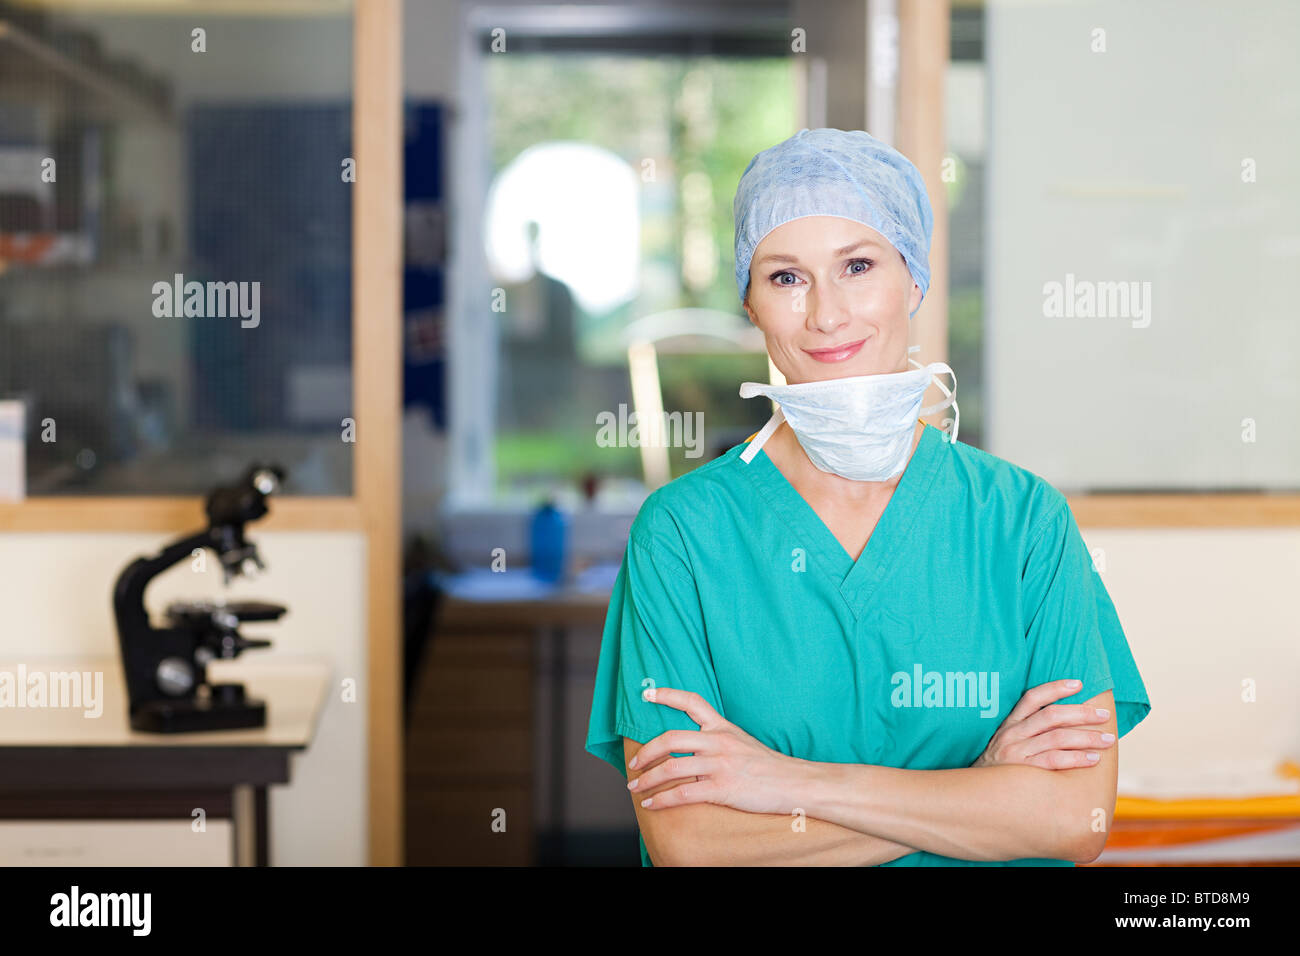 Female surgeon in scrubs Stock Photo